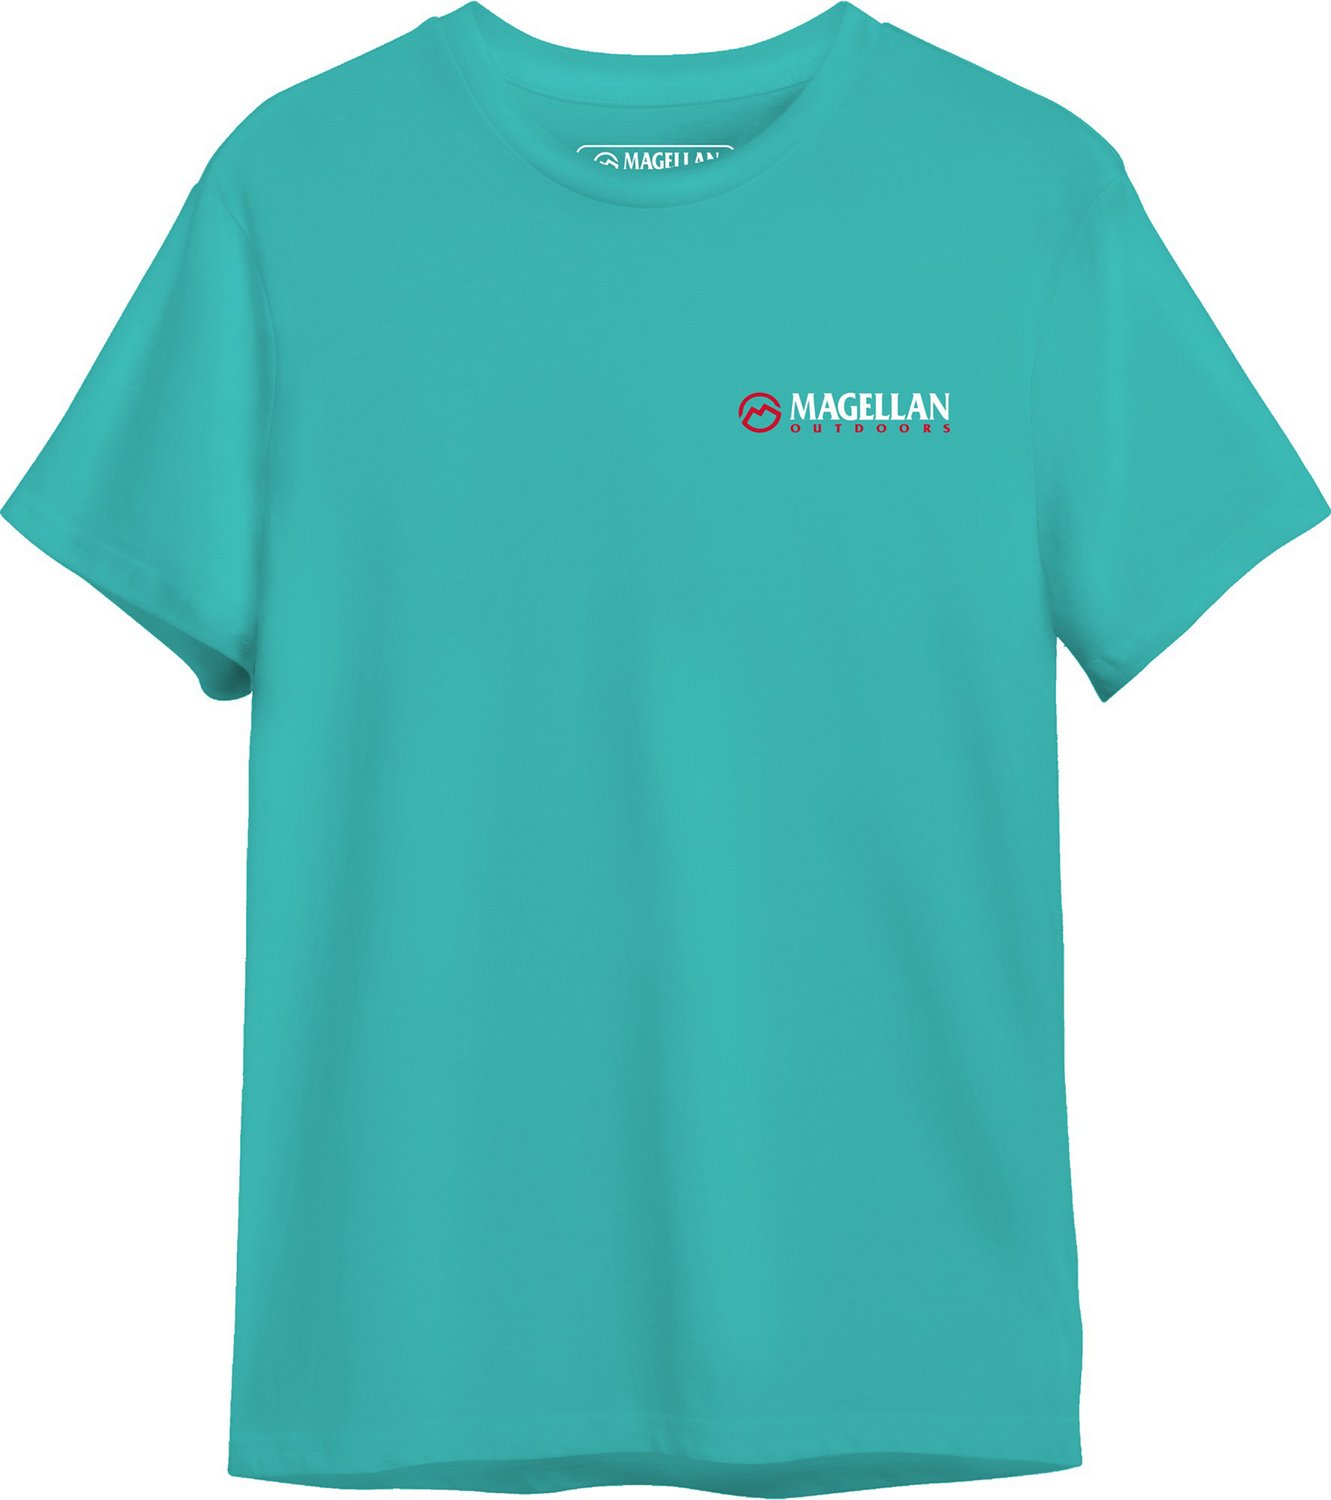 Magellan Outdoors Boys' Chocolate Dog T-shirt